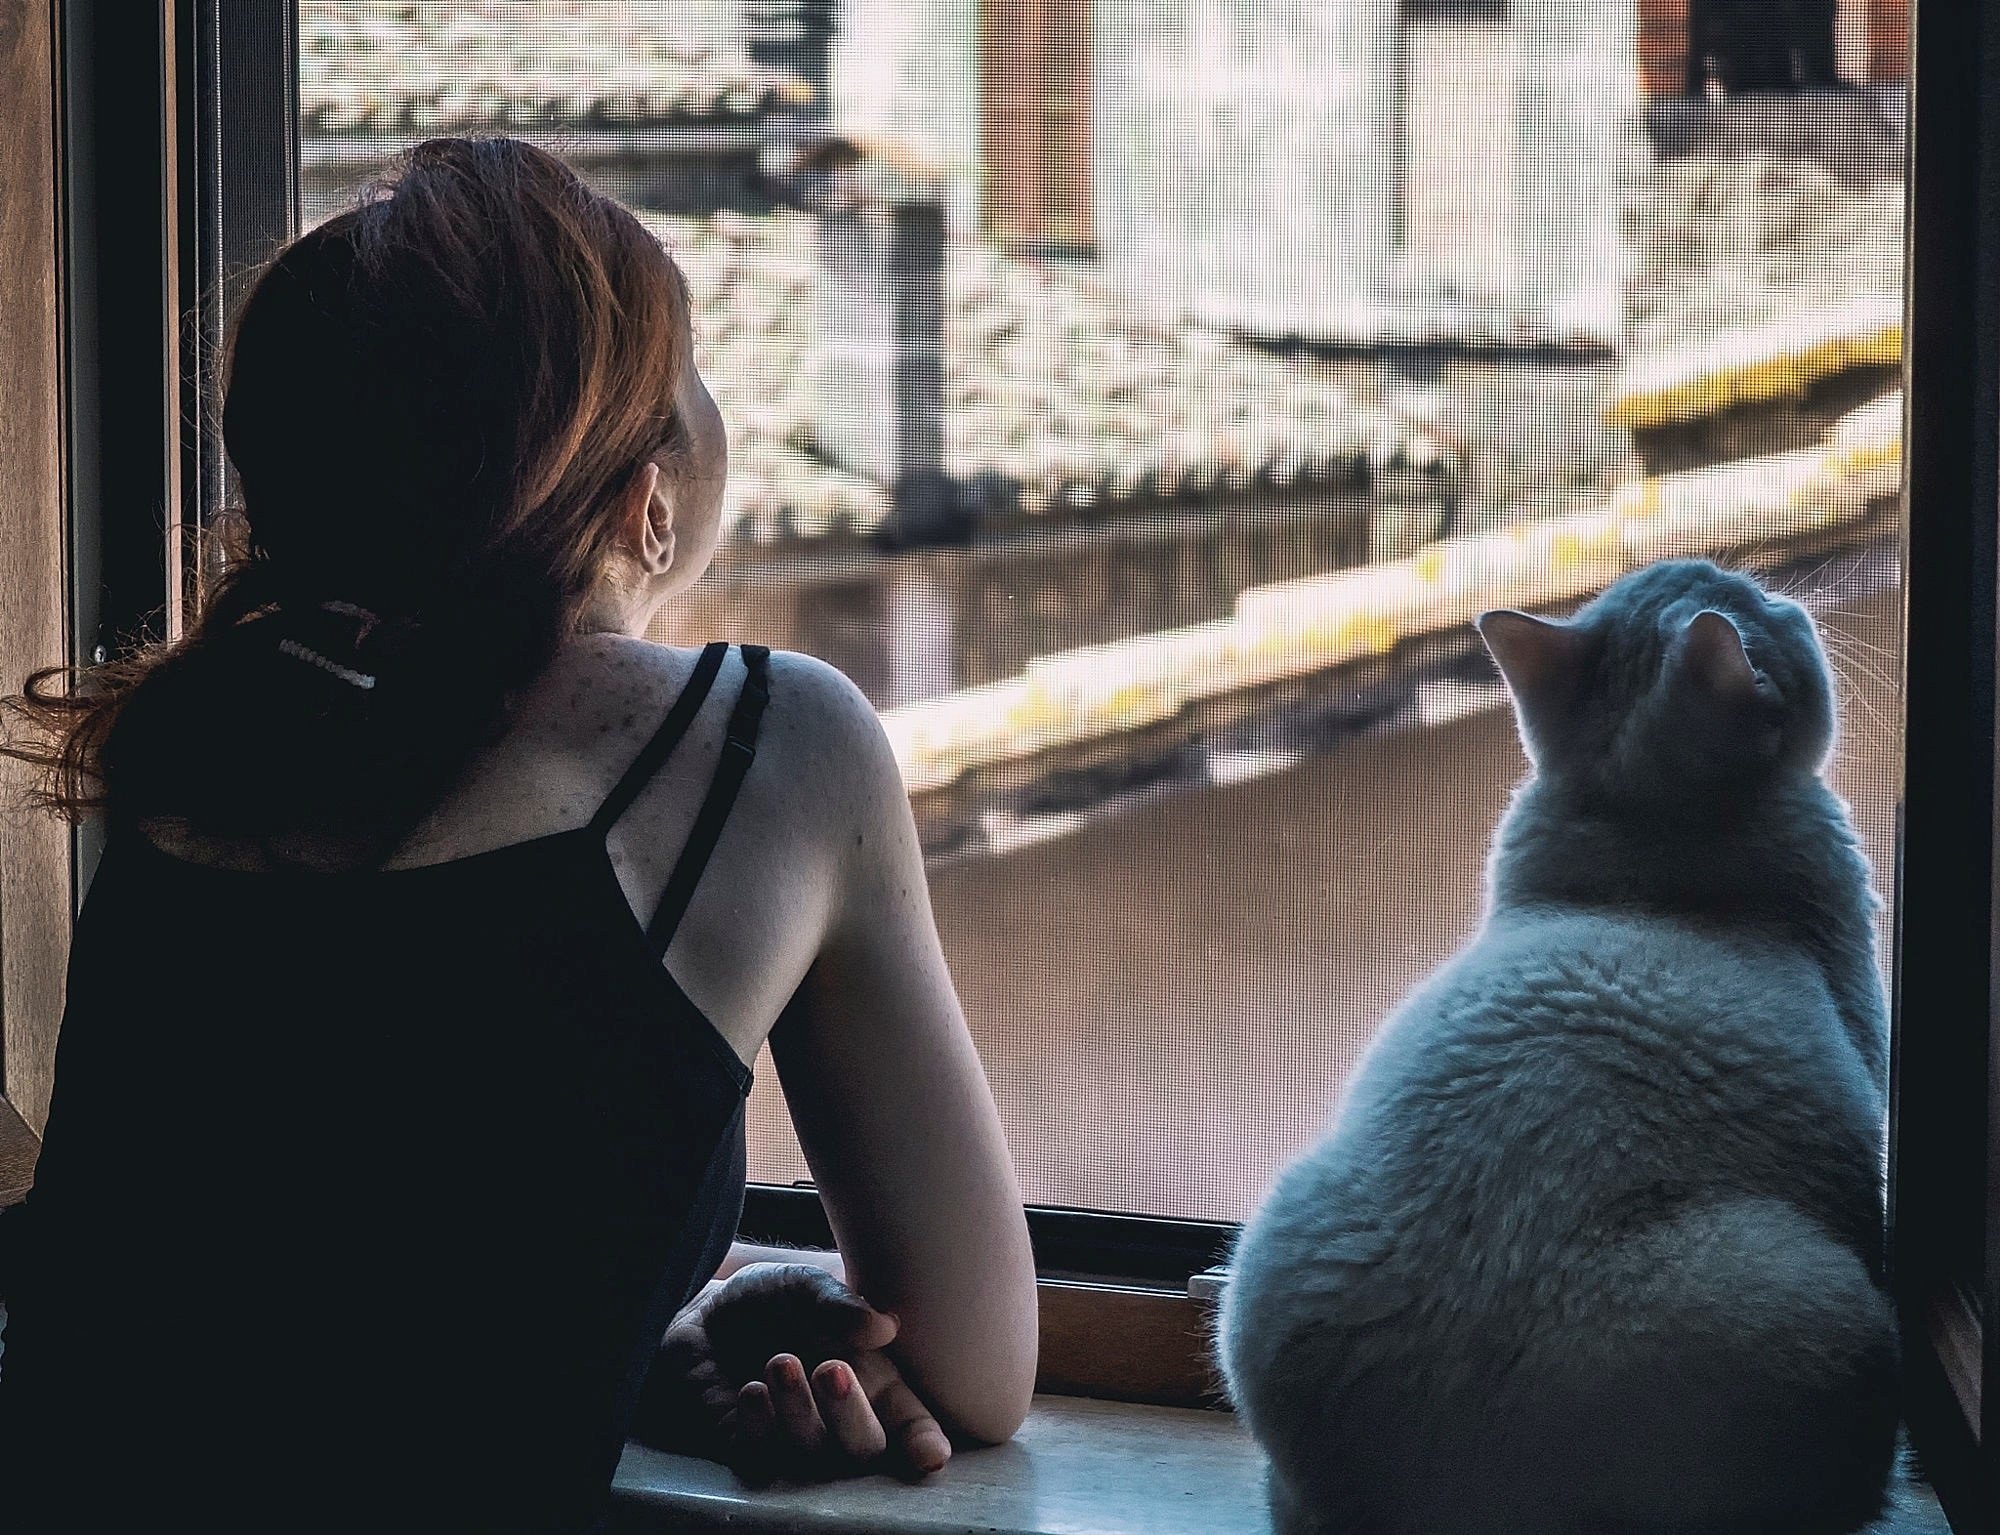 Картинка девушка с кошкой. Девушка с котом. Девушка с котом у окна. Женщина с котом спиной. Девушка с котом на подоконнике.